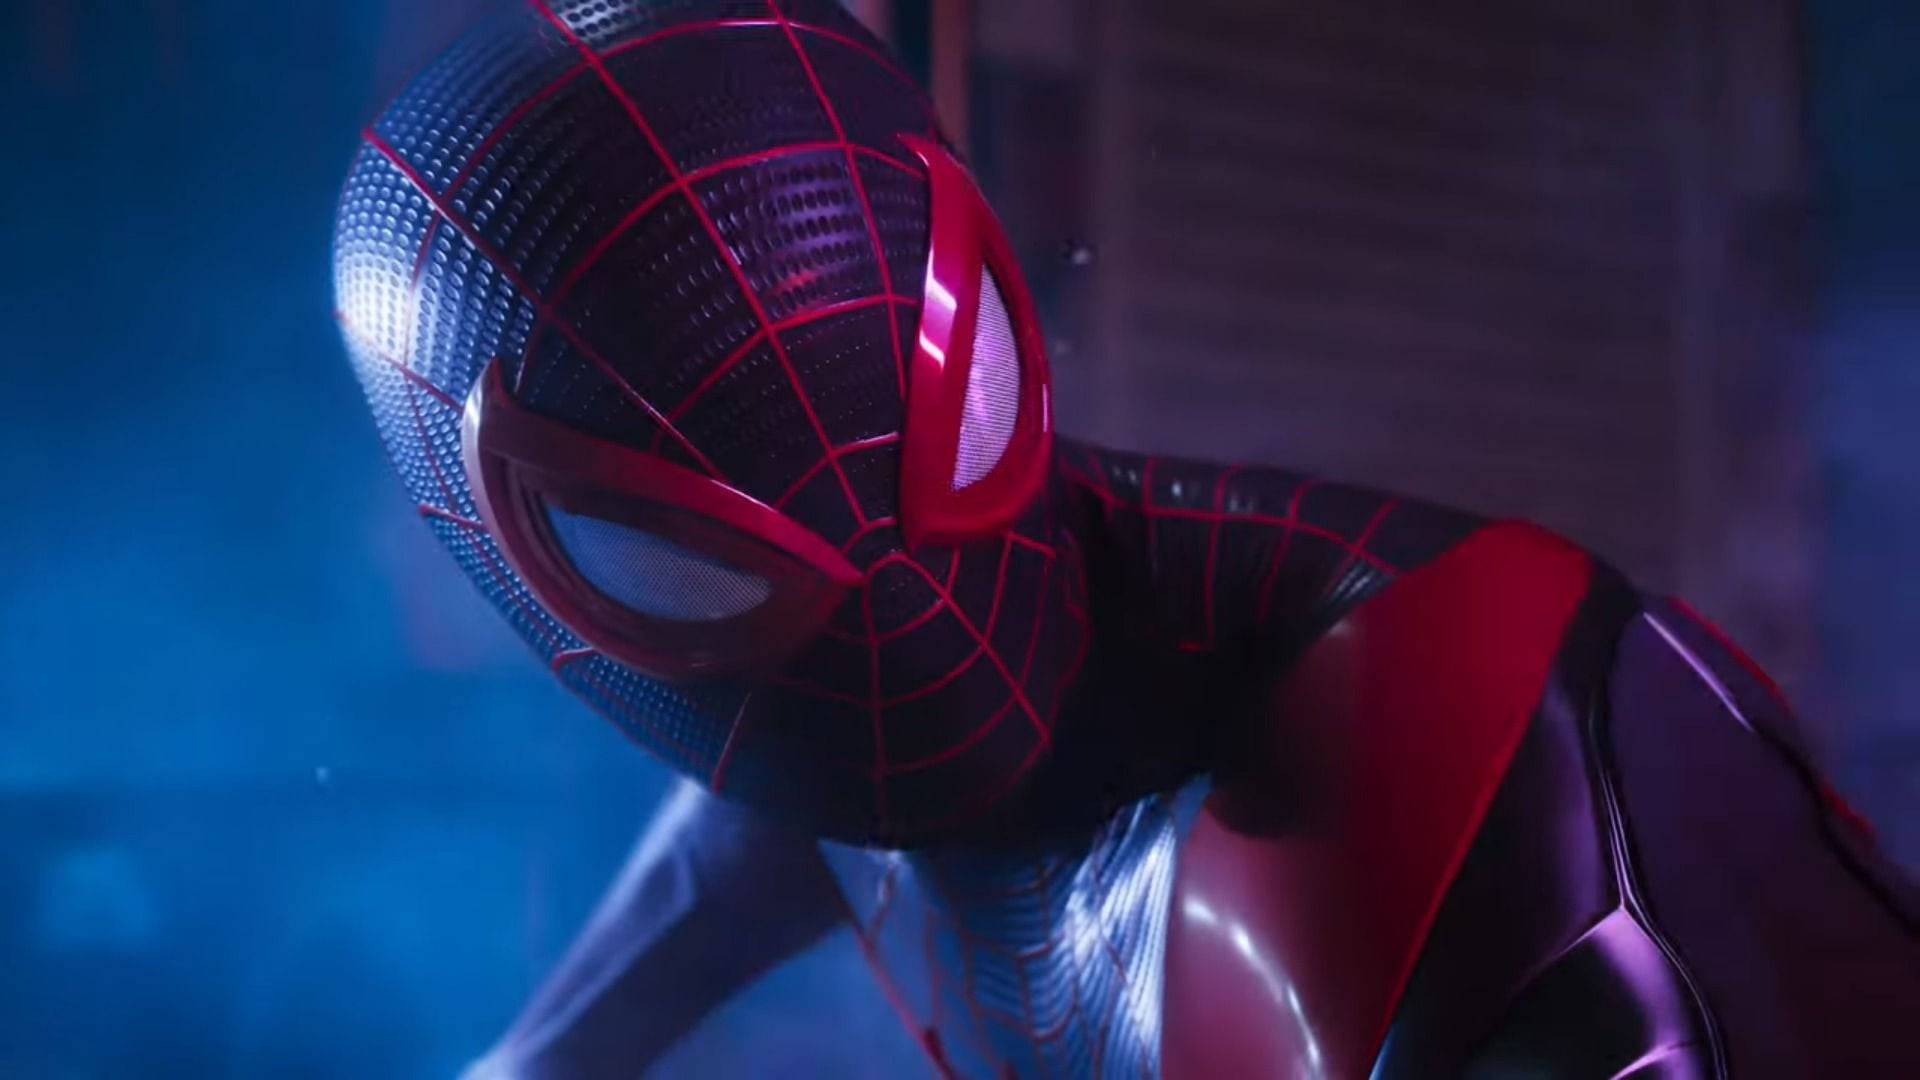  Marvel's Spider-Man: Miles Morales - PlayStation 4